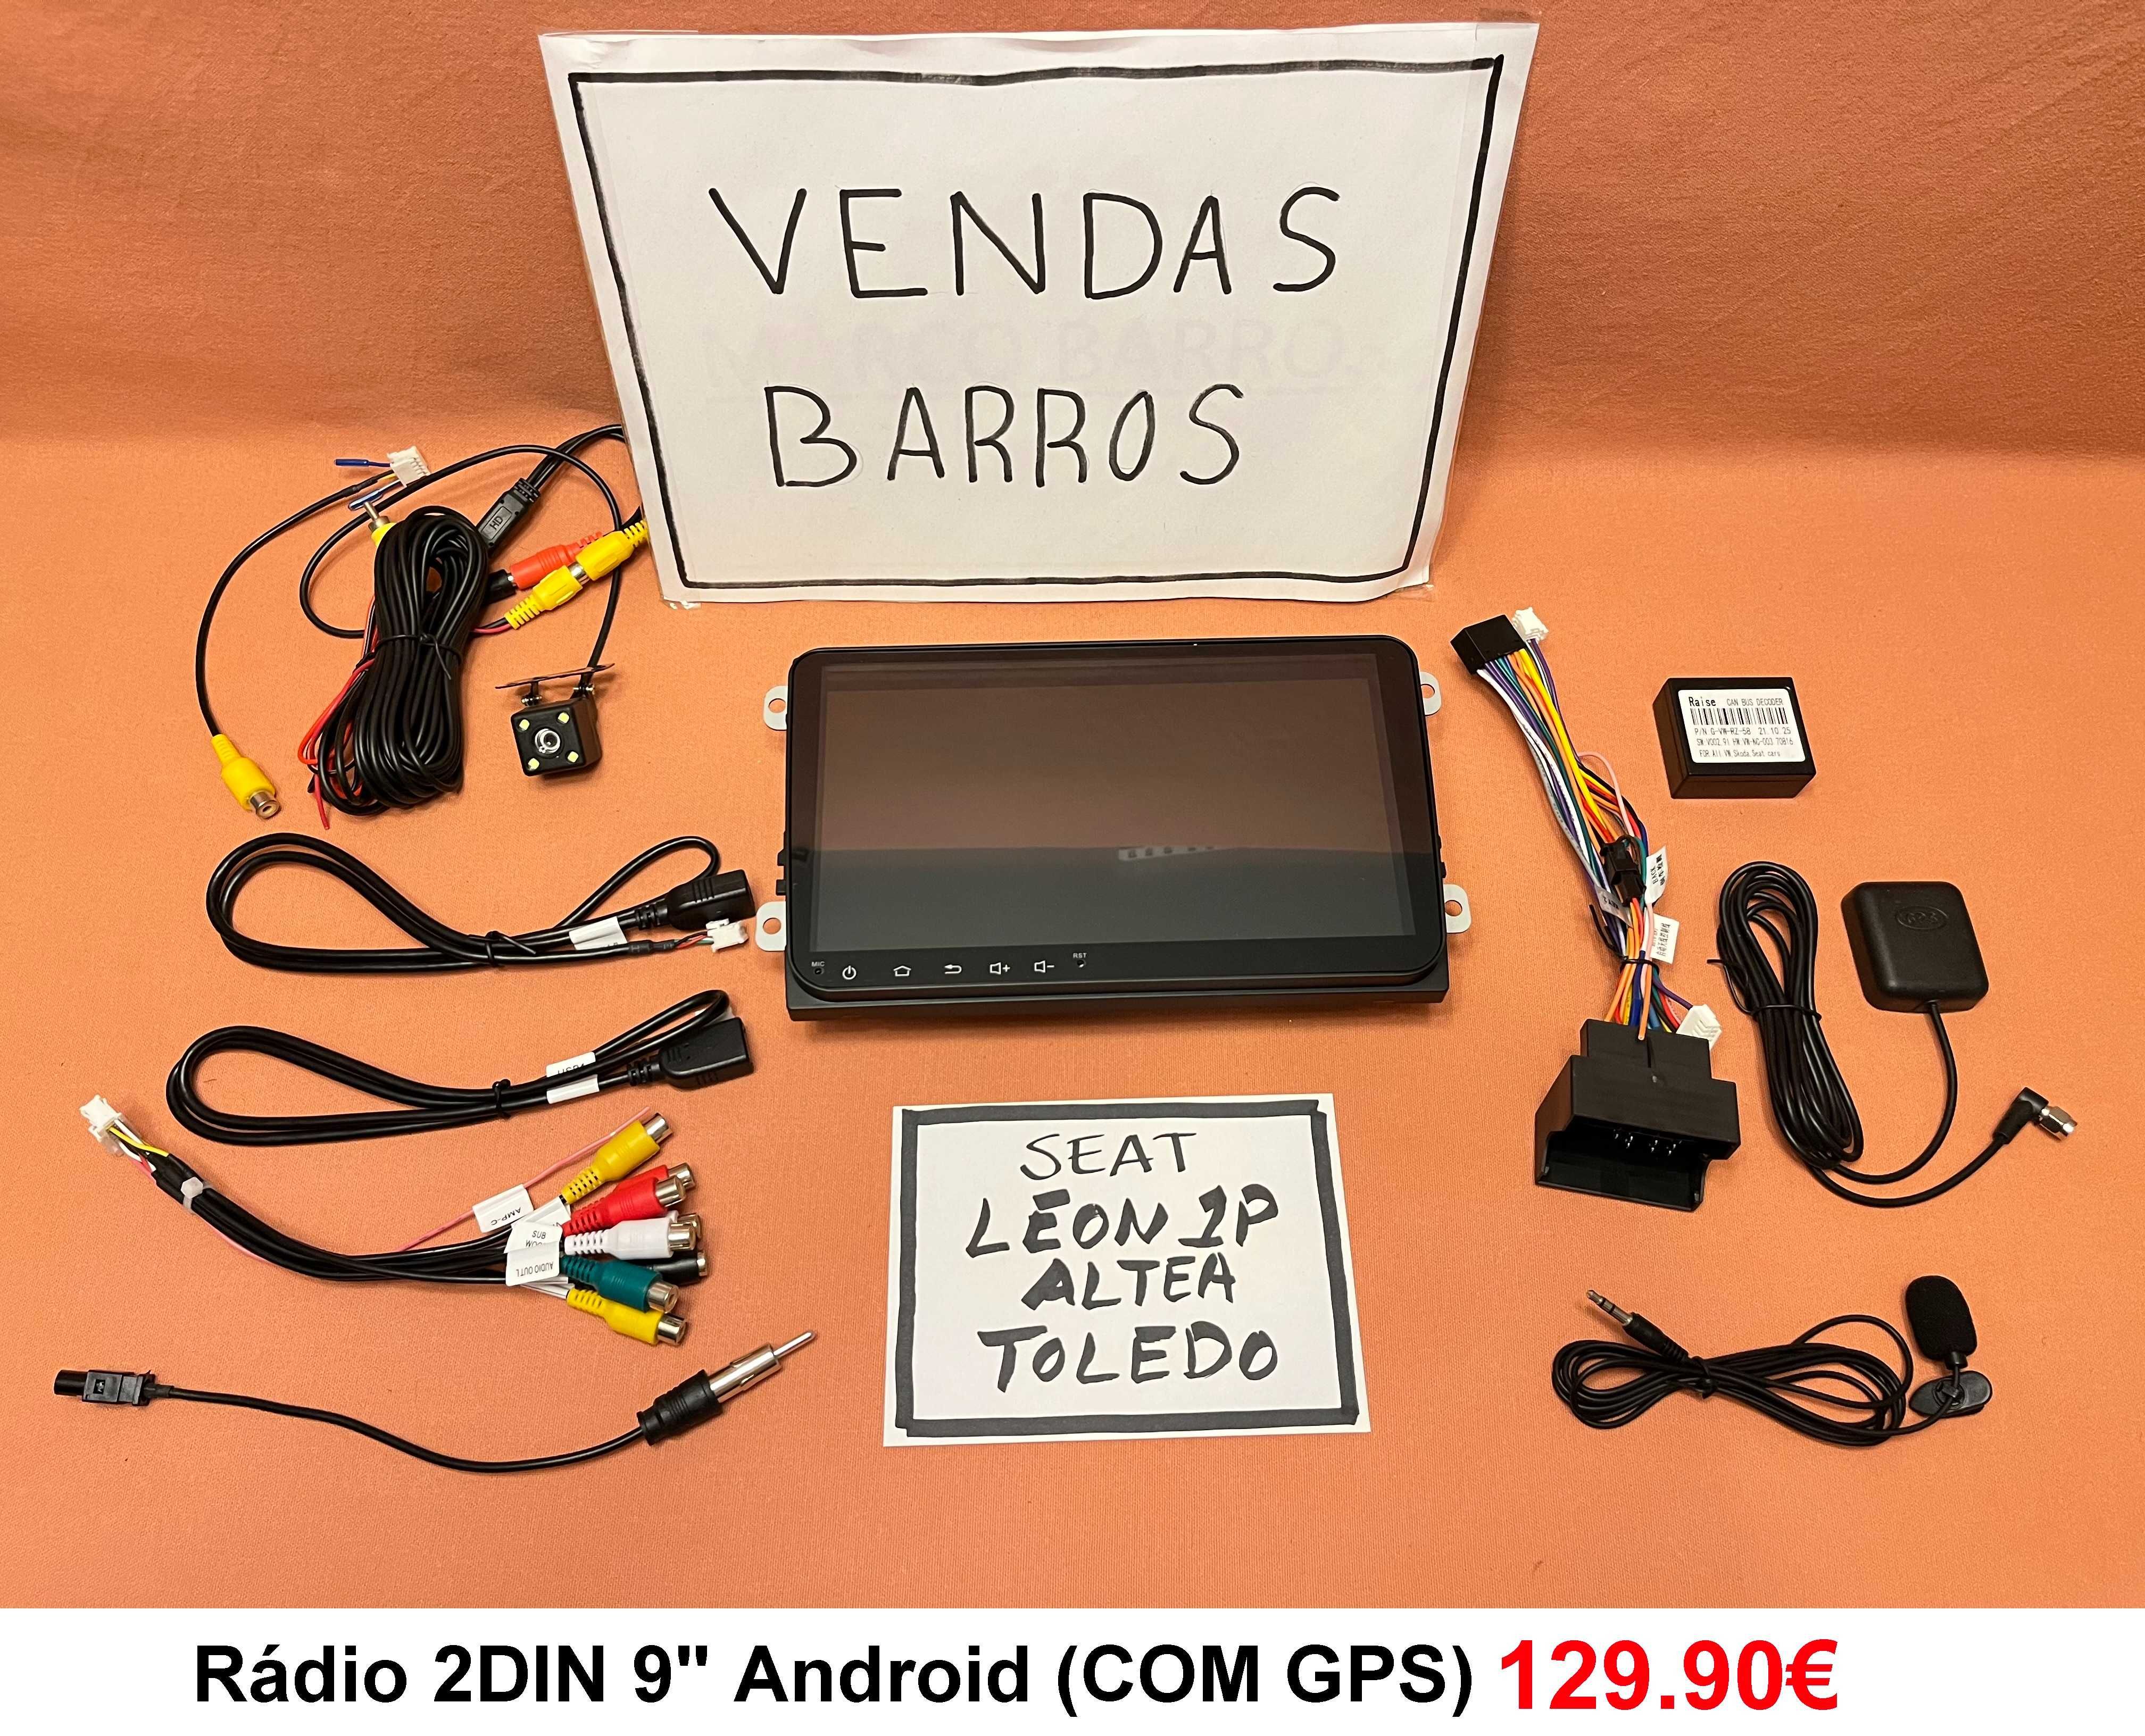 (NOVO) Rádio 2DIN 9" • SEAT Leon 1P • Toledo • Altea • Android 4+32GB